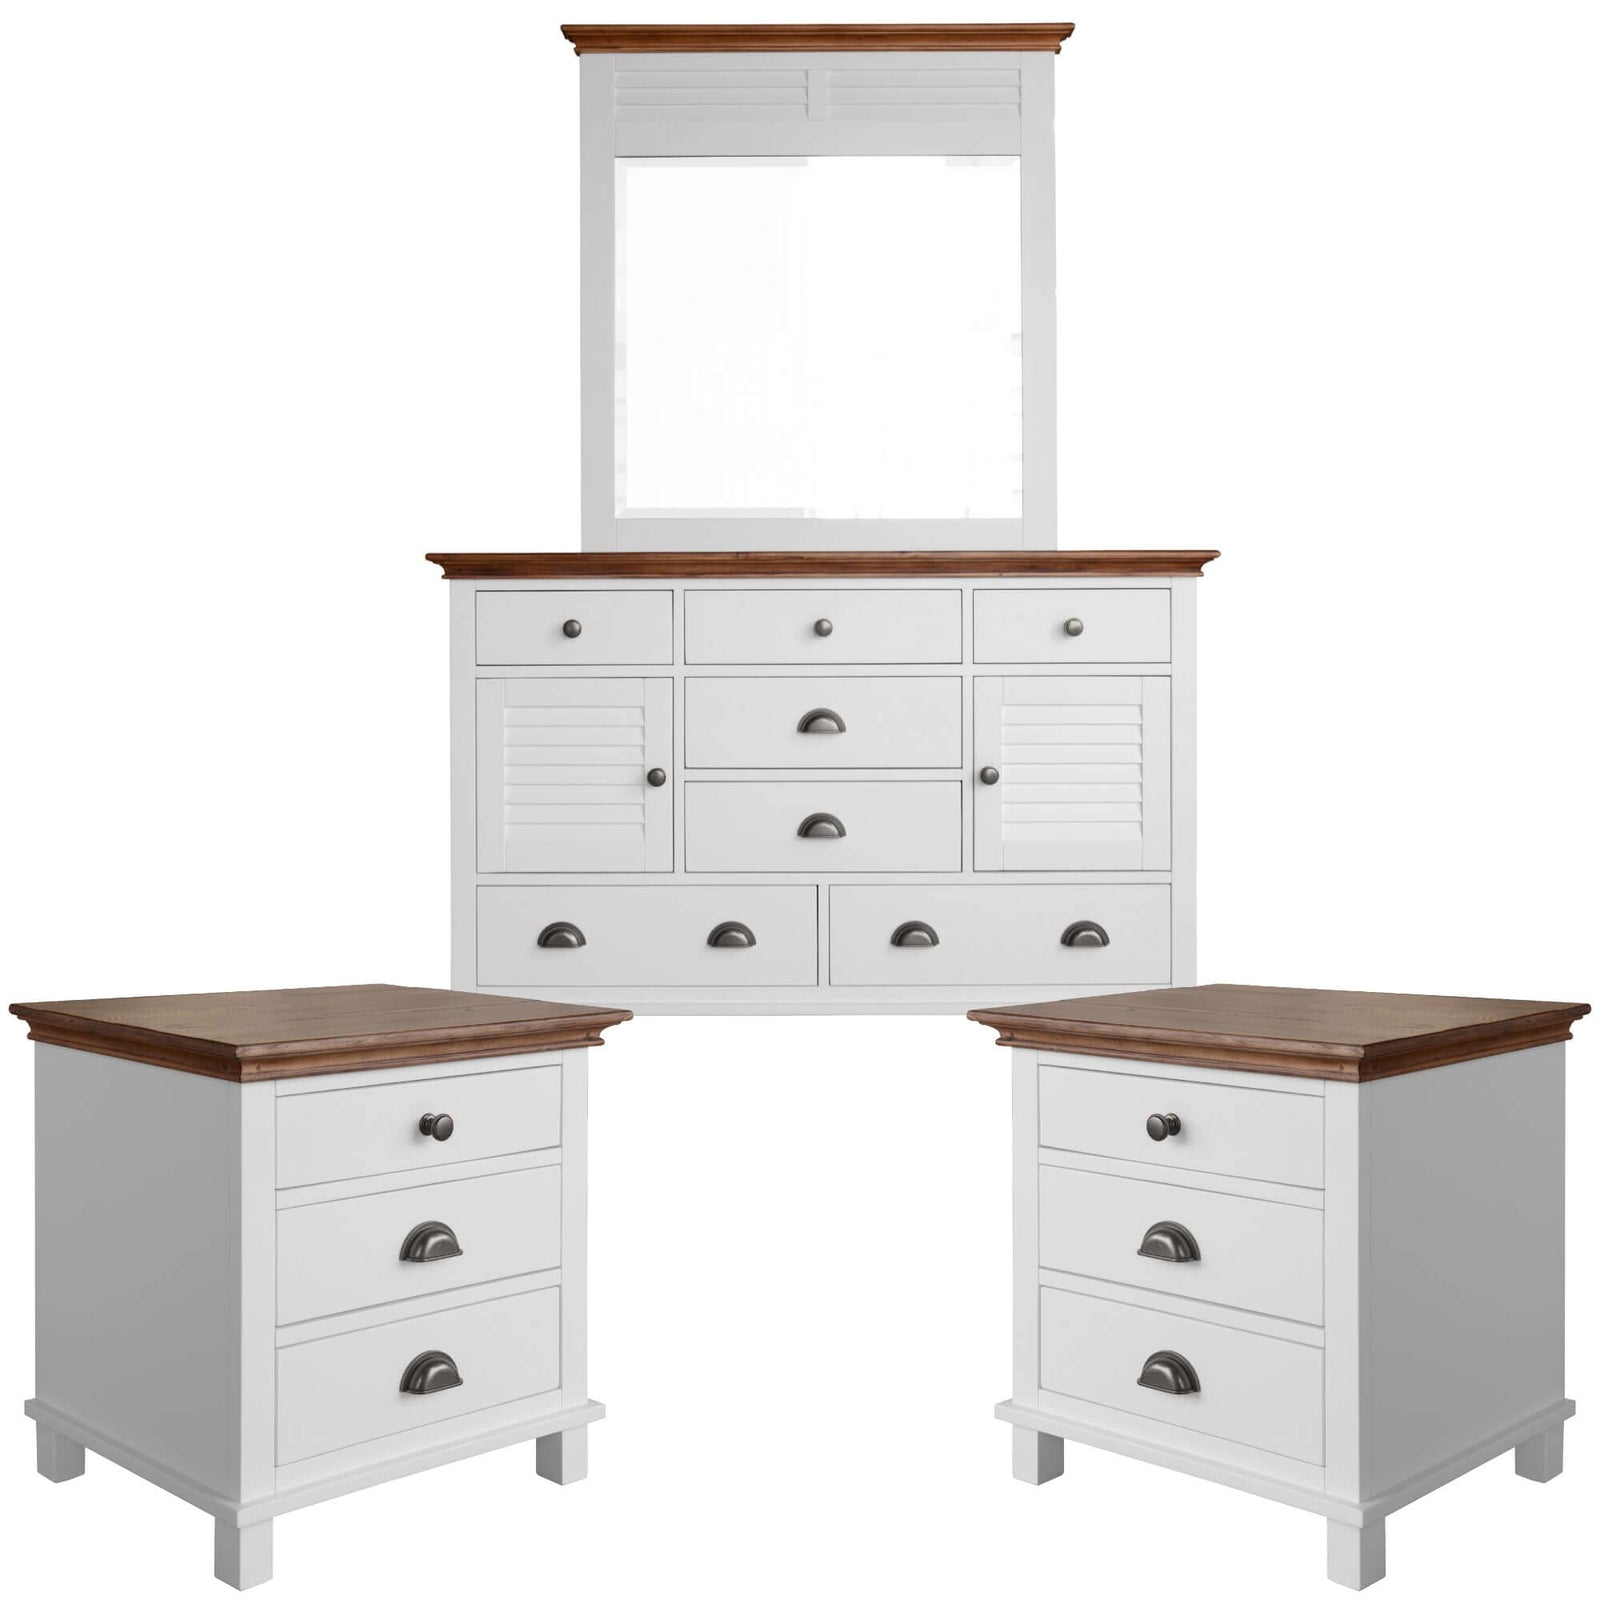 Virginia Bedside Dresser 3pc Bedroom Set Drawers Nightstand Storage Cabinet -WHT-Upinteriors